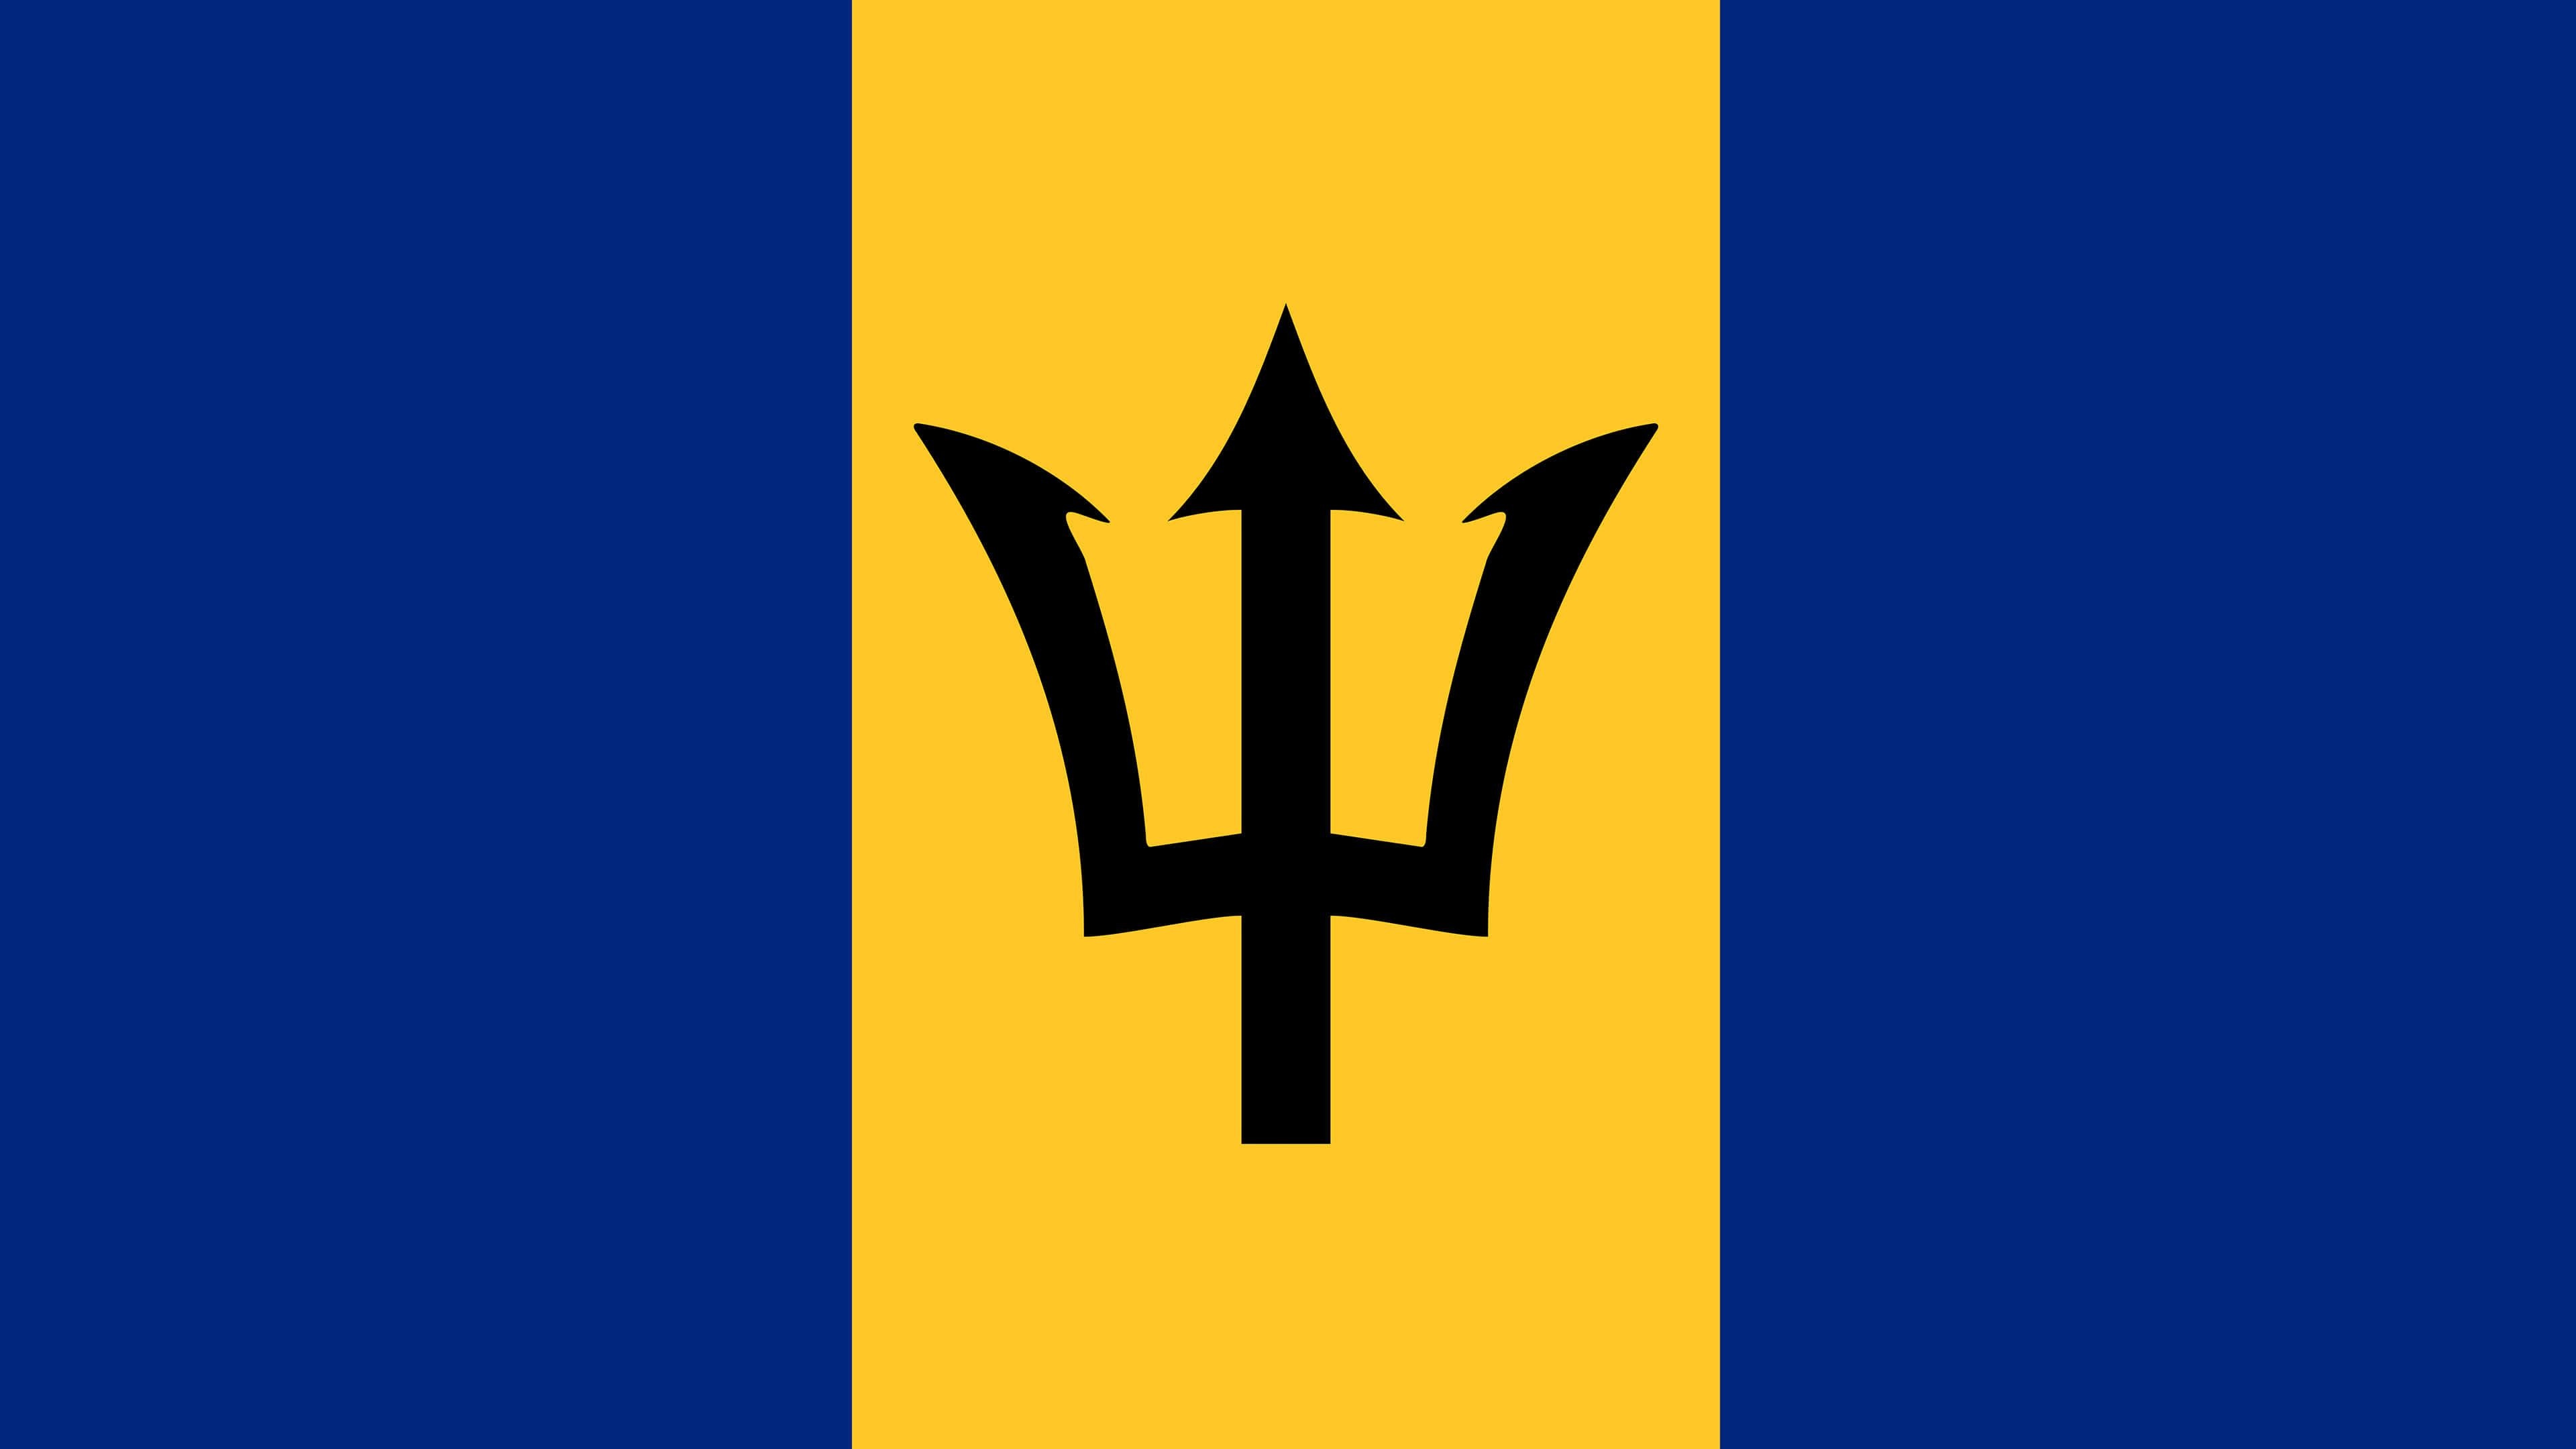 Barbados flag wallpapers, Patriotic symbols, National identity, Striking designs, 3840x2160 4K Desktop